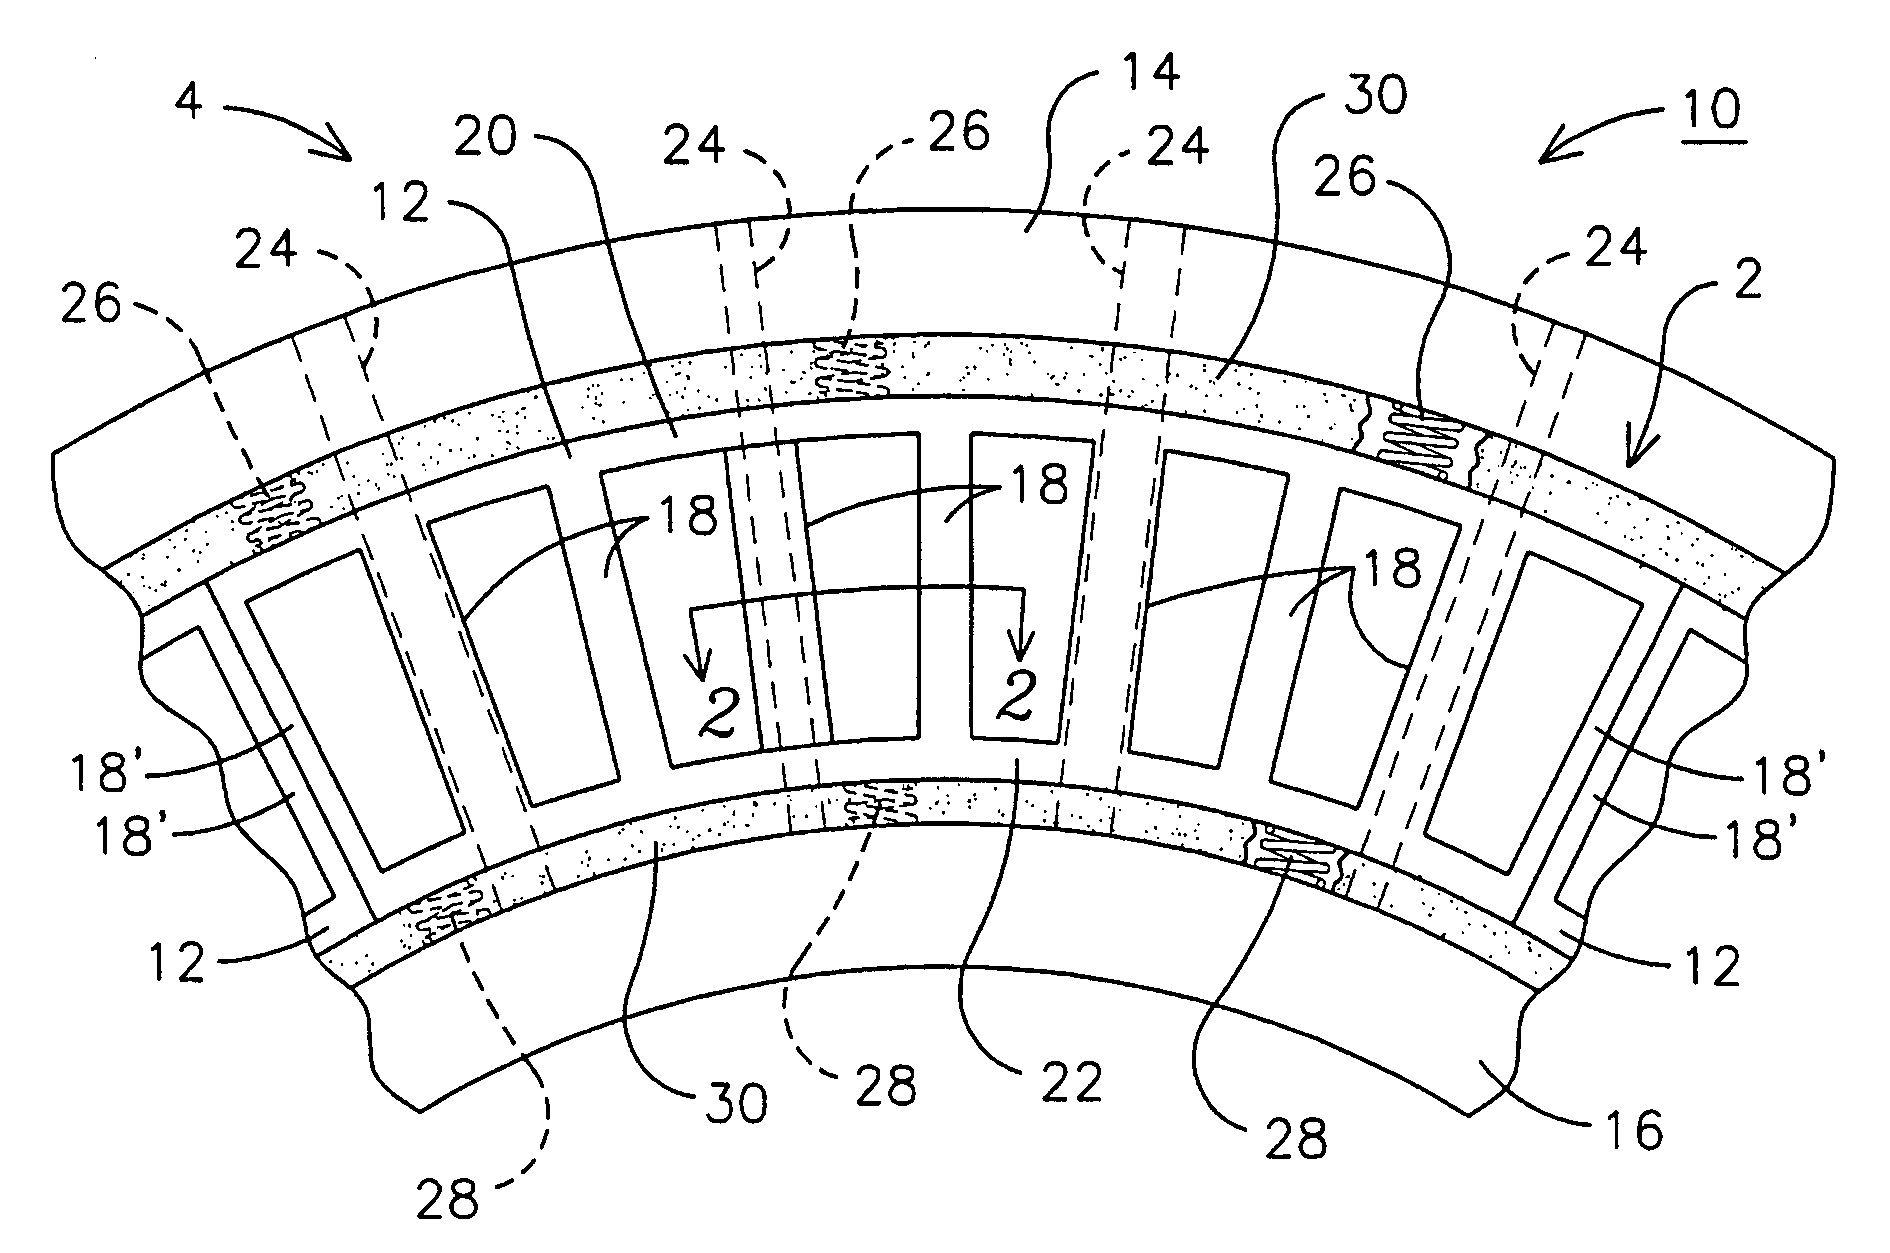 Multivane segment mounting arrangement for a gas turbine